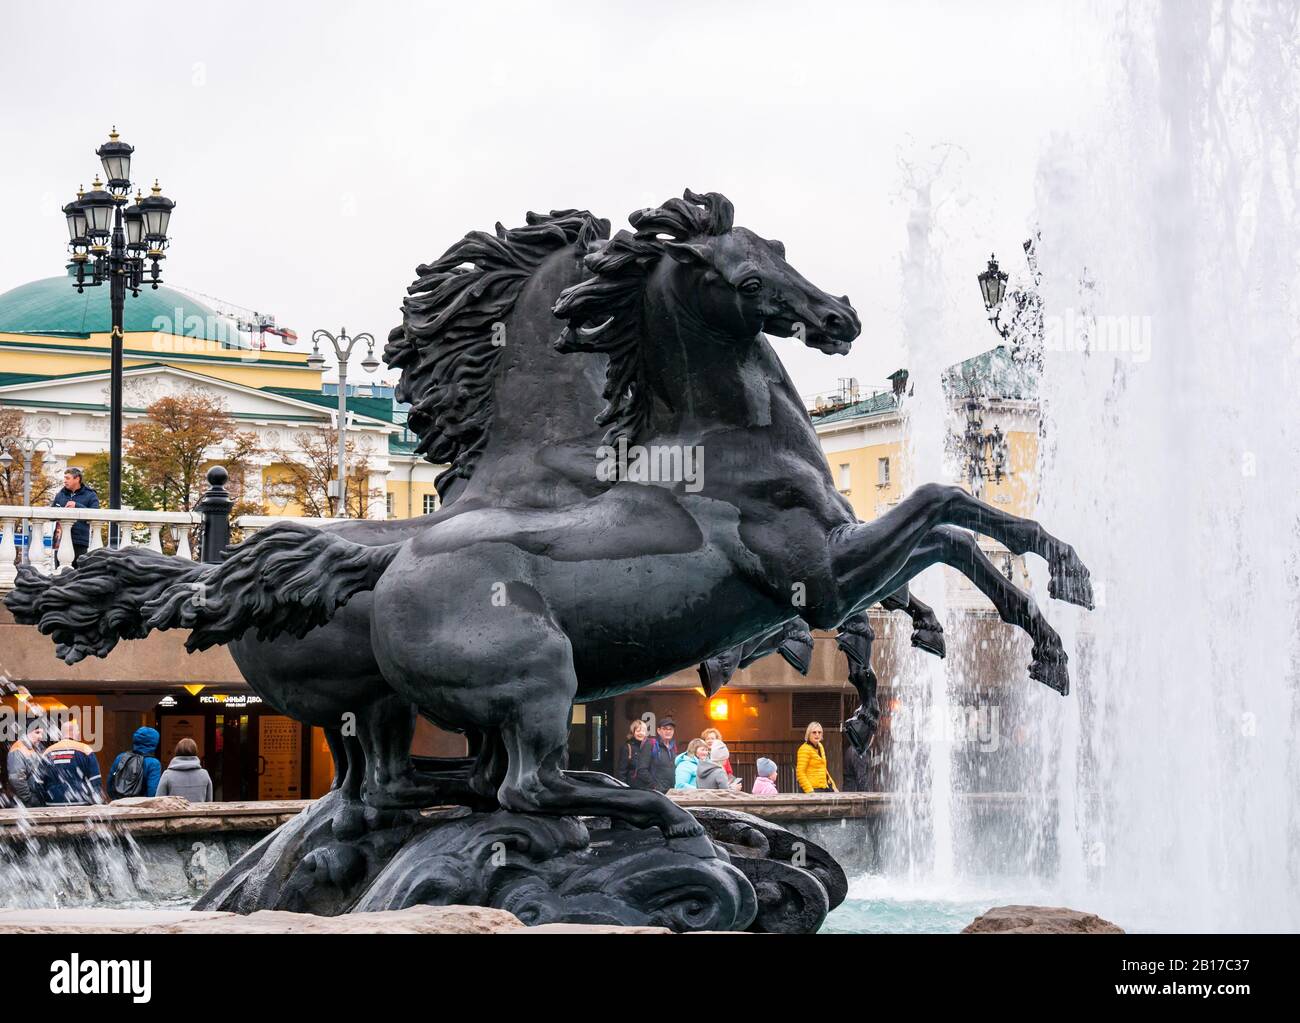 Four Seasons Fountain of rearing horses by Zurab Tsereteli, Alexander Gardens, Moscow, Russian Federation Stock Photo